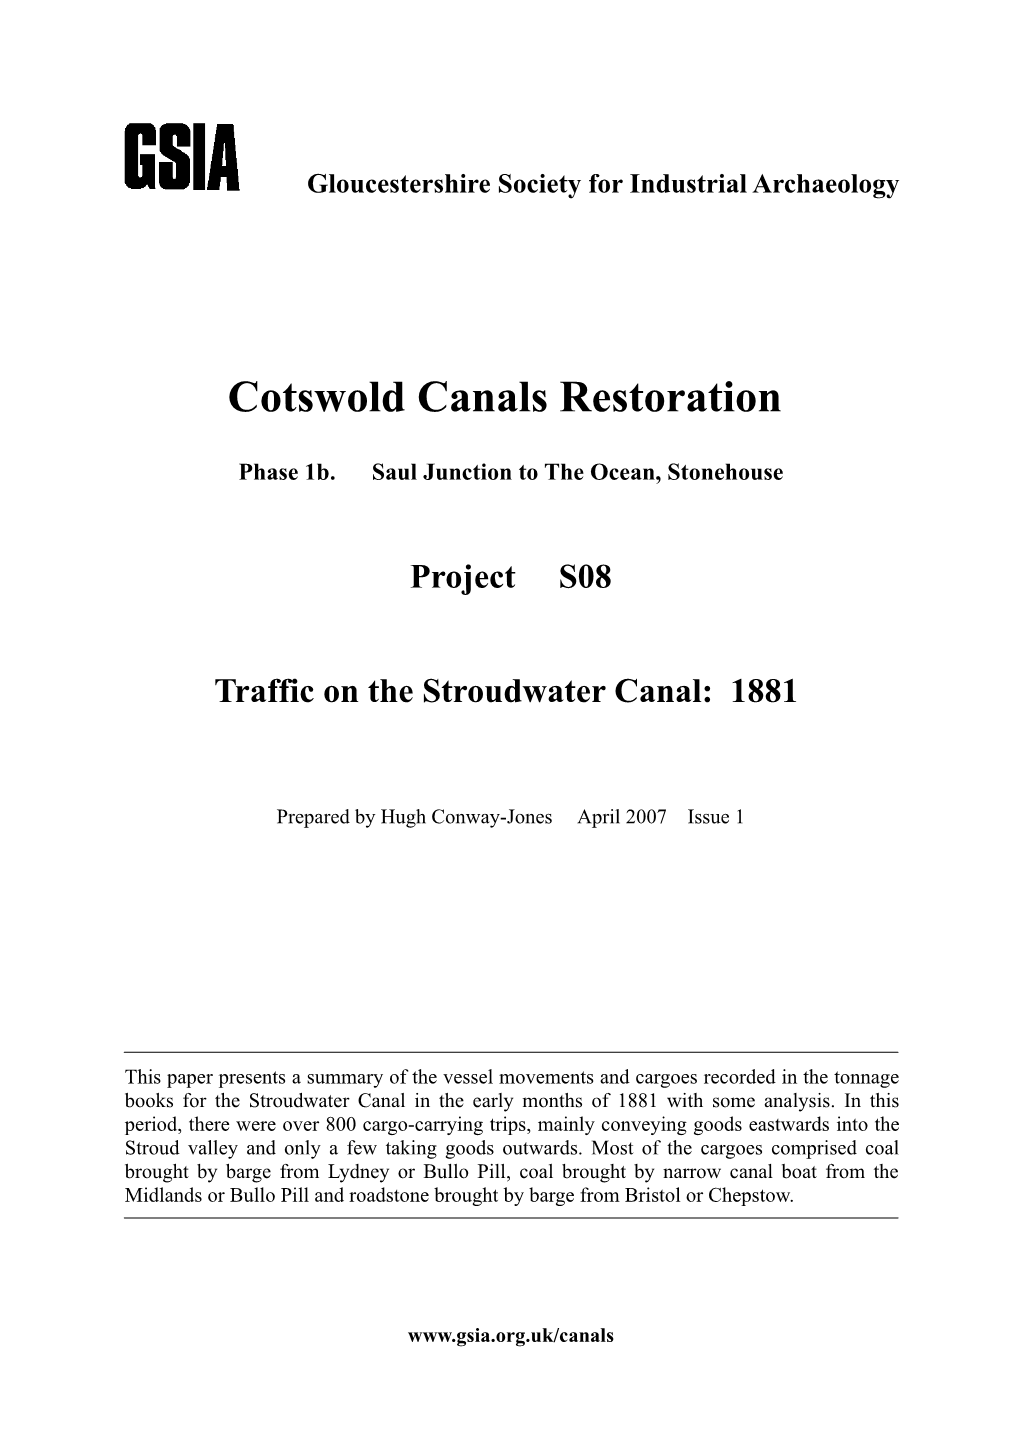 Cotswold Canals Restoration